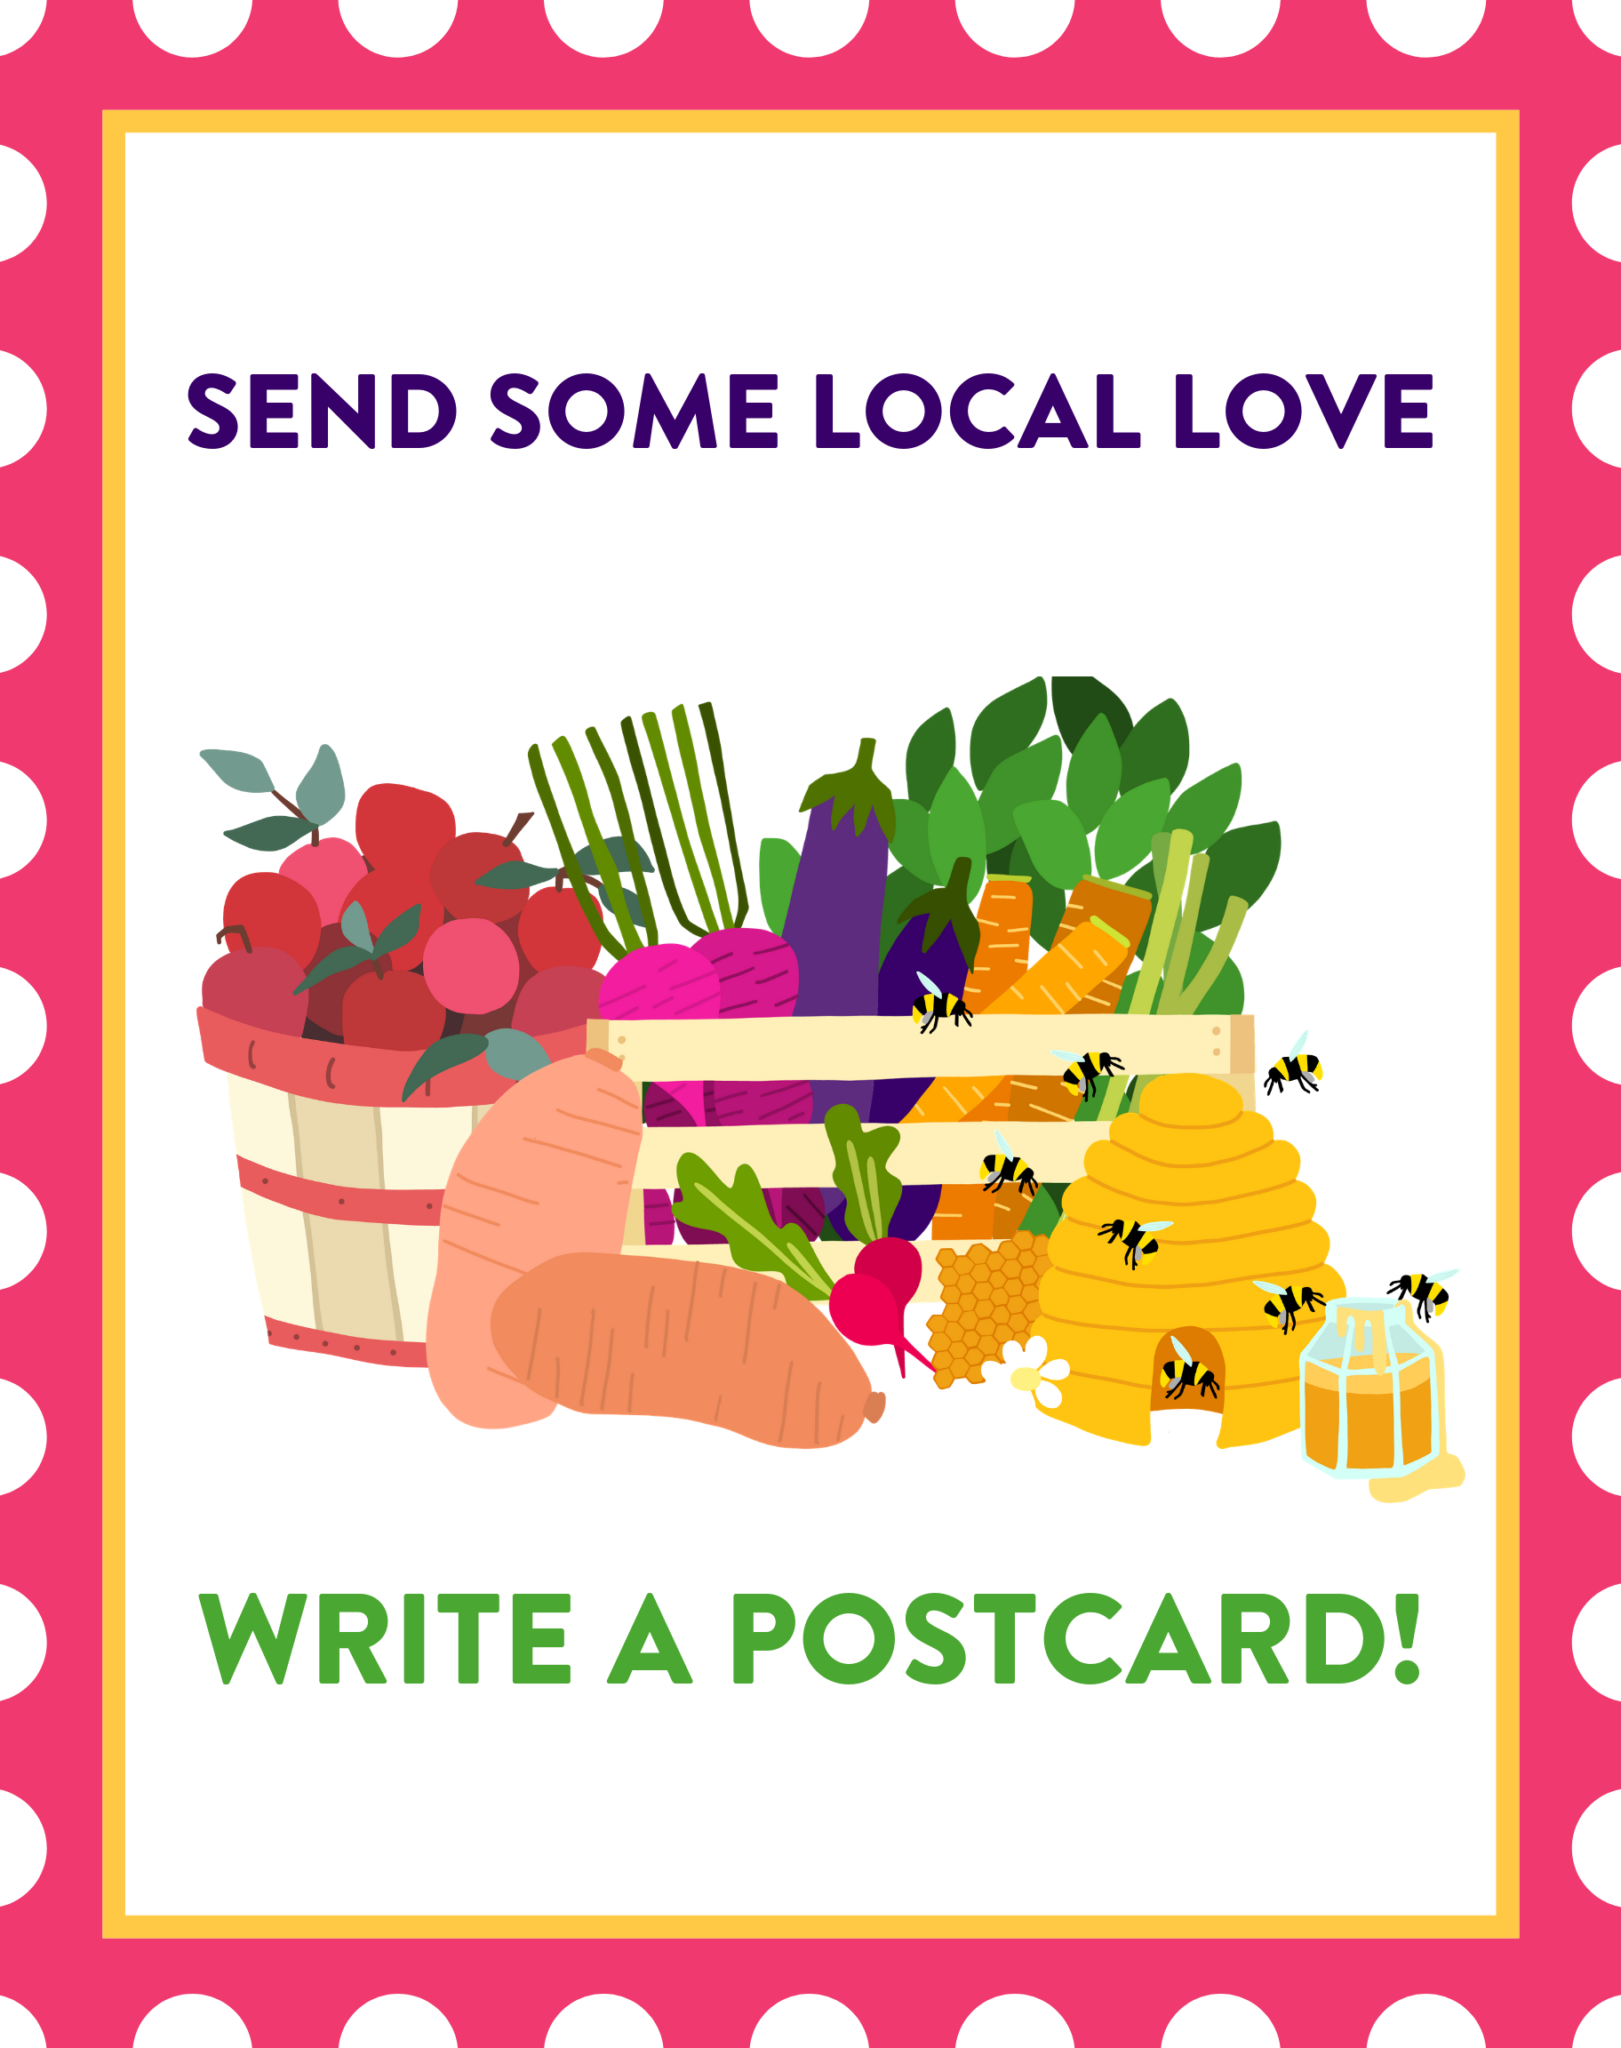 Send Some Local Love: Write a Postcard! sign